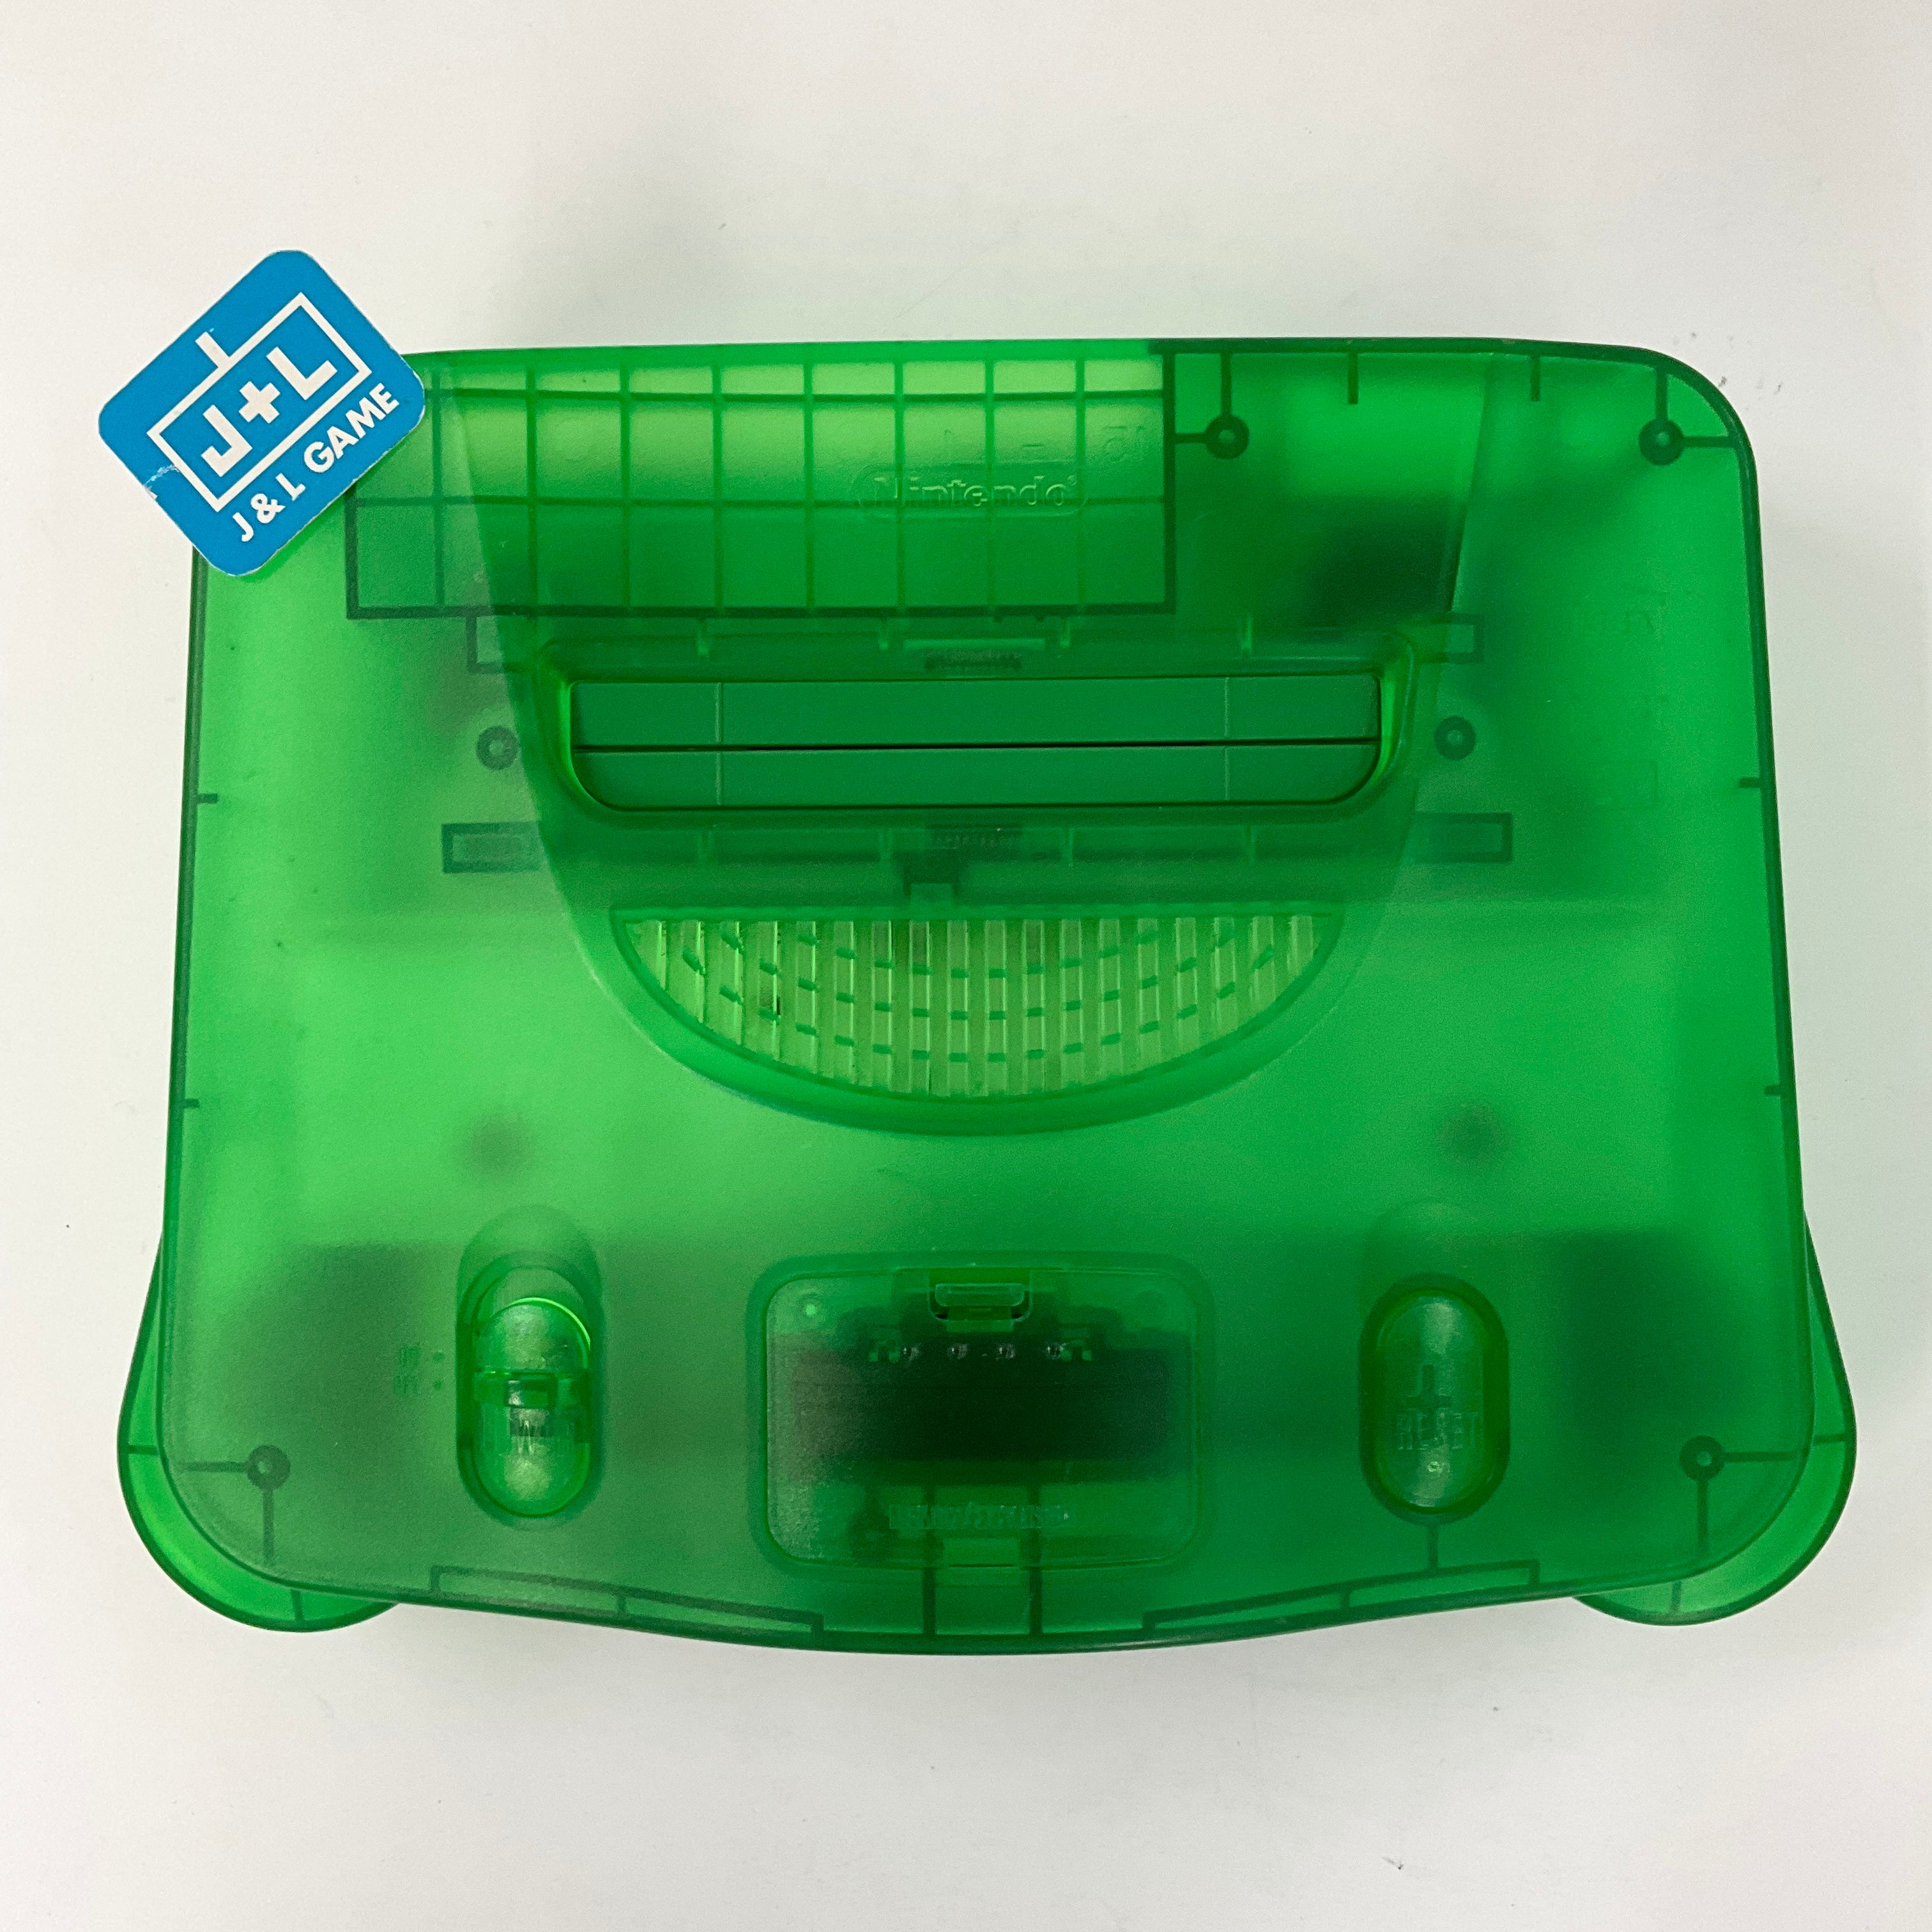 Nintendo 64 Hardware Console (Jungle Green) - (N64) Nintendo 64 [Pre-Owned] CONSOLE Nintendo   